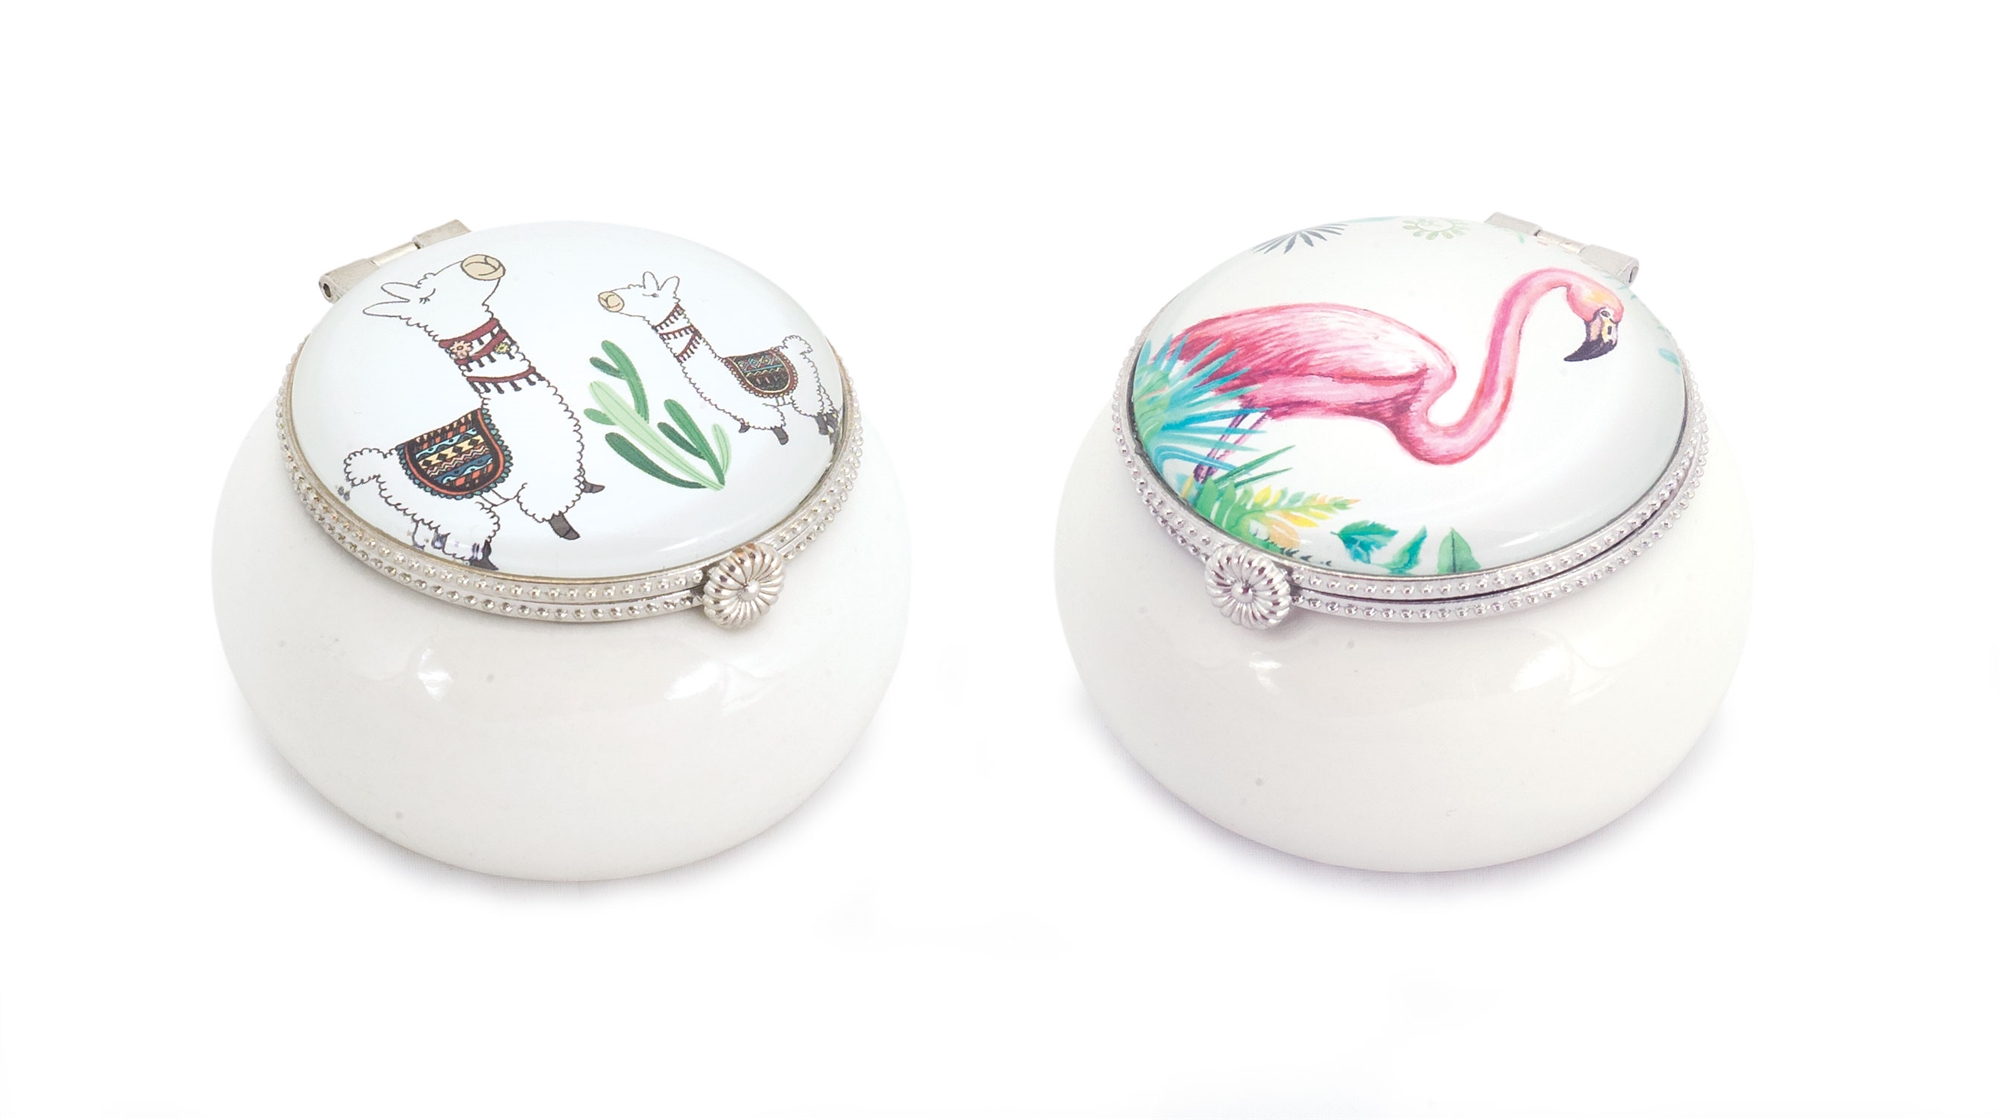 Llama and Flamingo Box (Set of 12) 2"H Porcelain